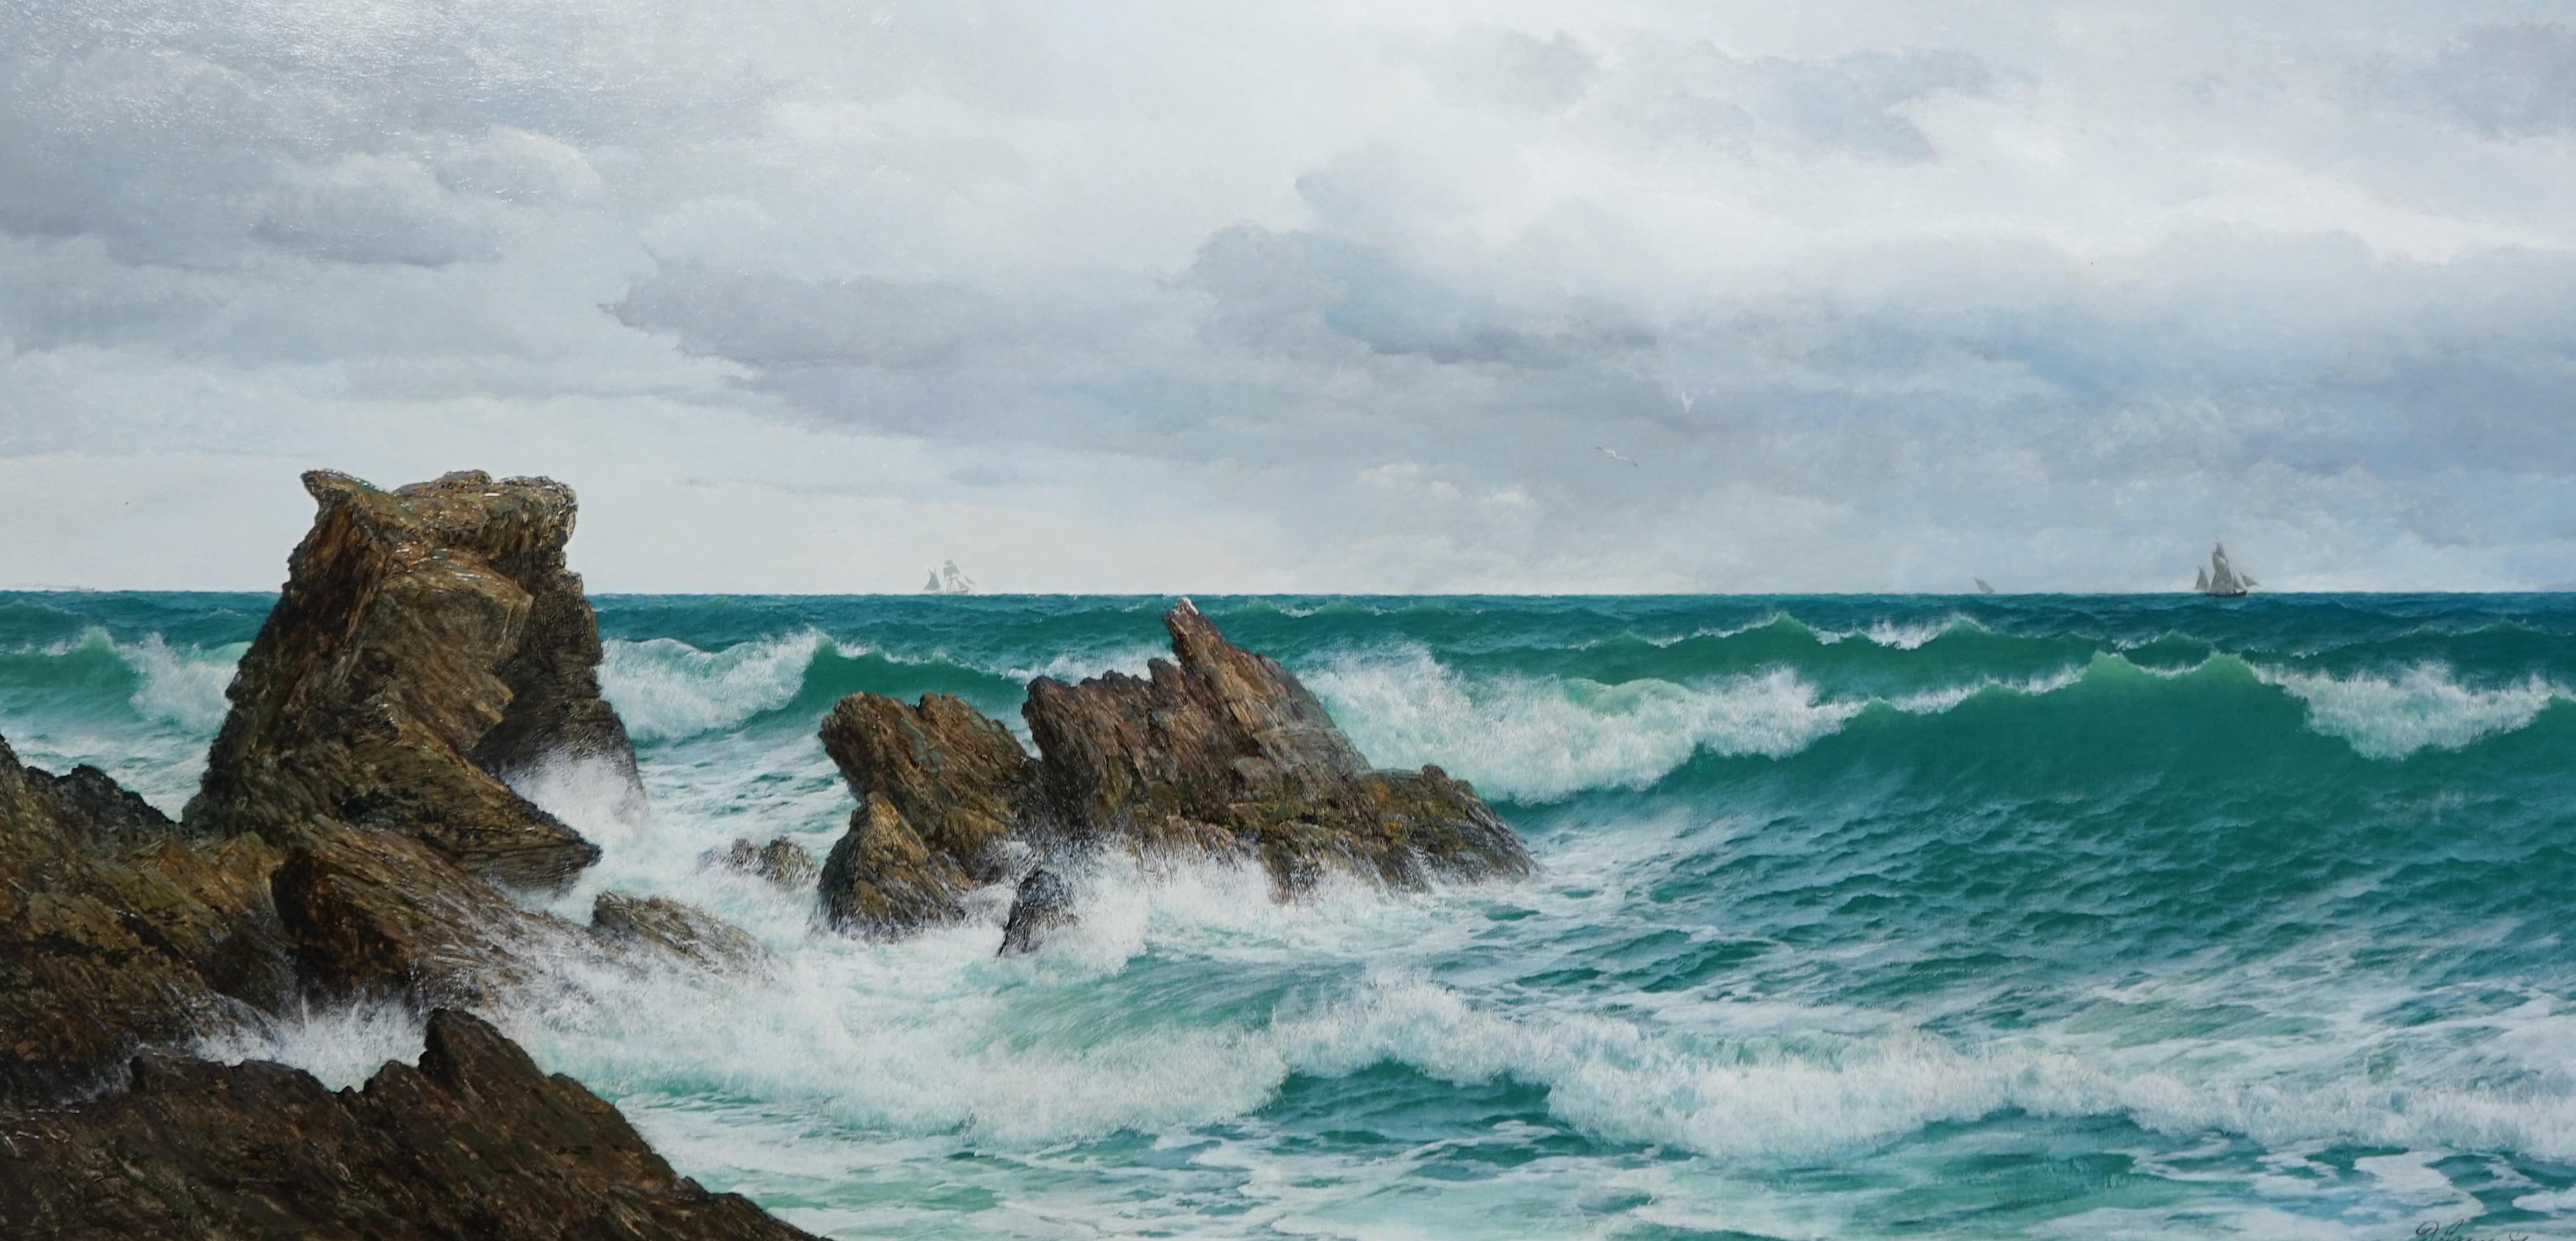 David James (English, 1854-1904), 'Hightide, Bude Bay, Cornwall', oil on canvas, 62 x 124cm